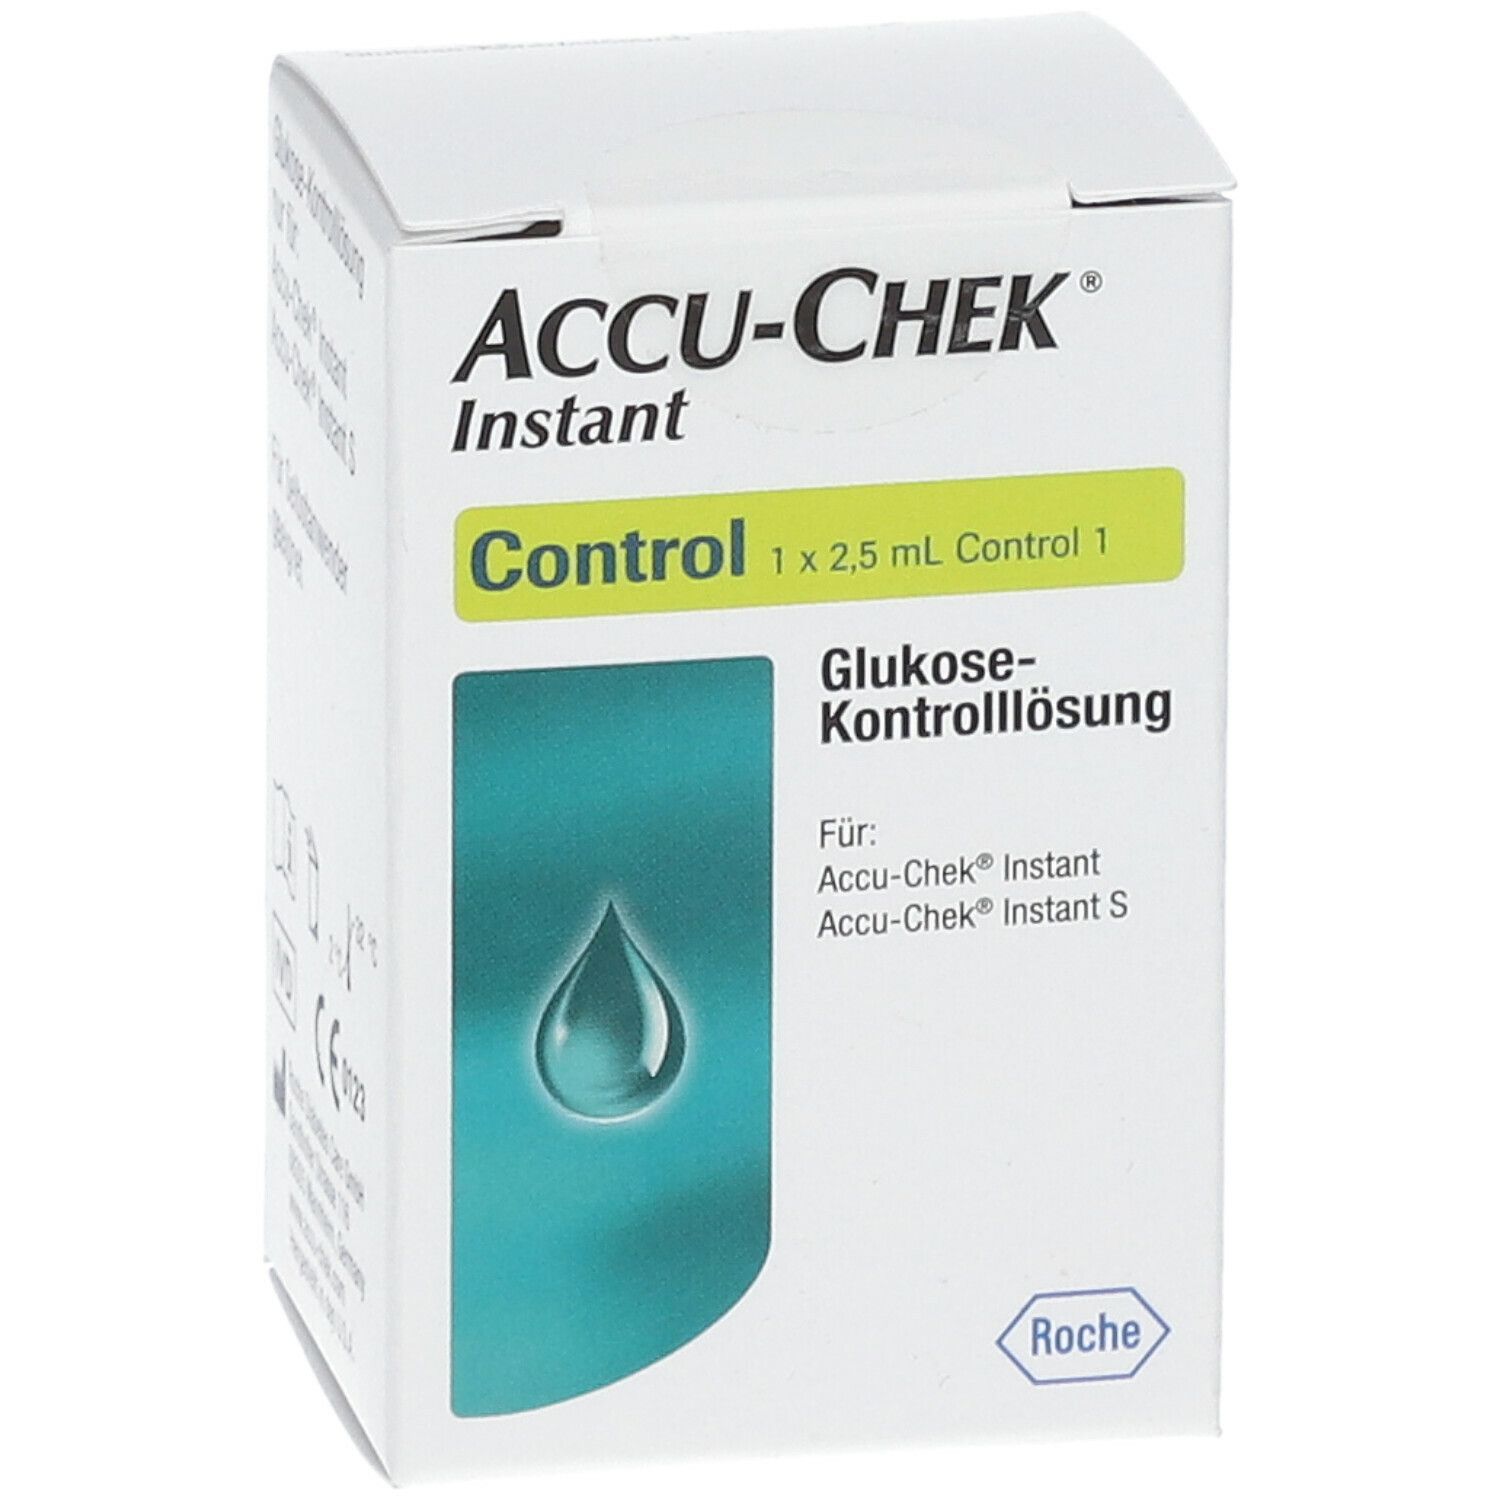 ACCU-CHEK® Instant Control